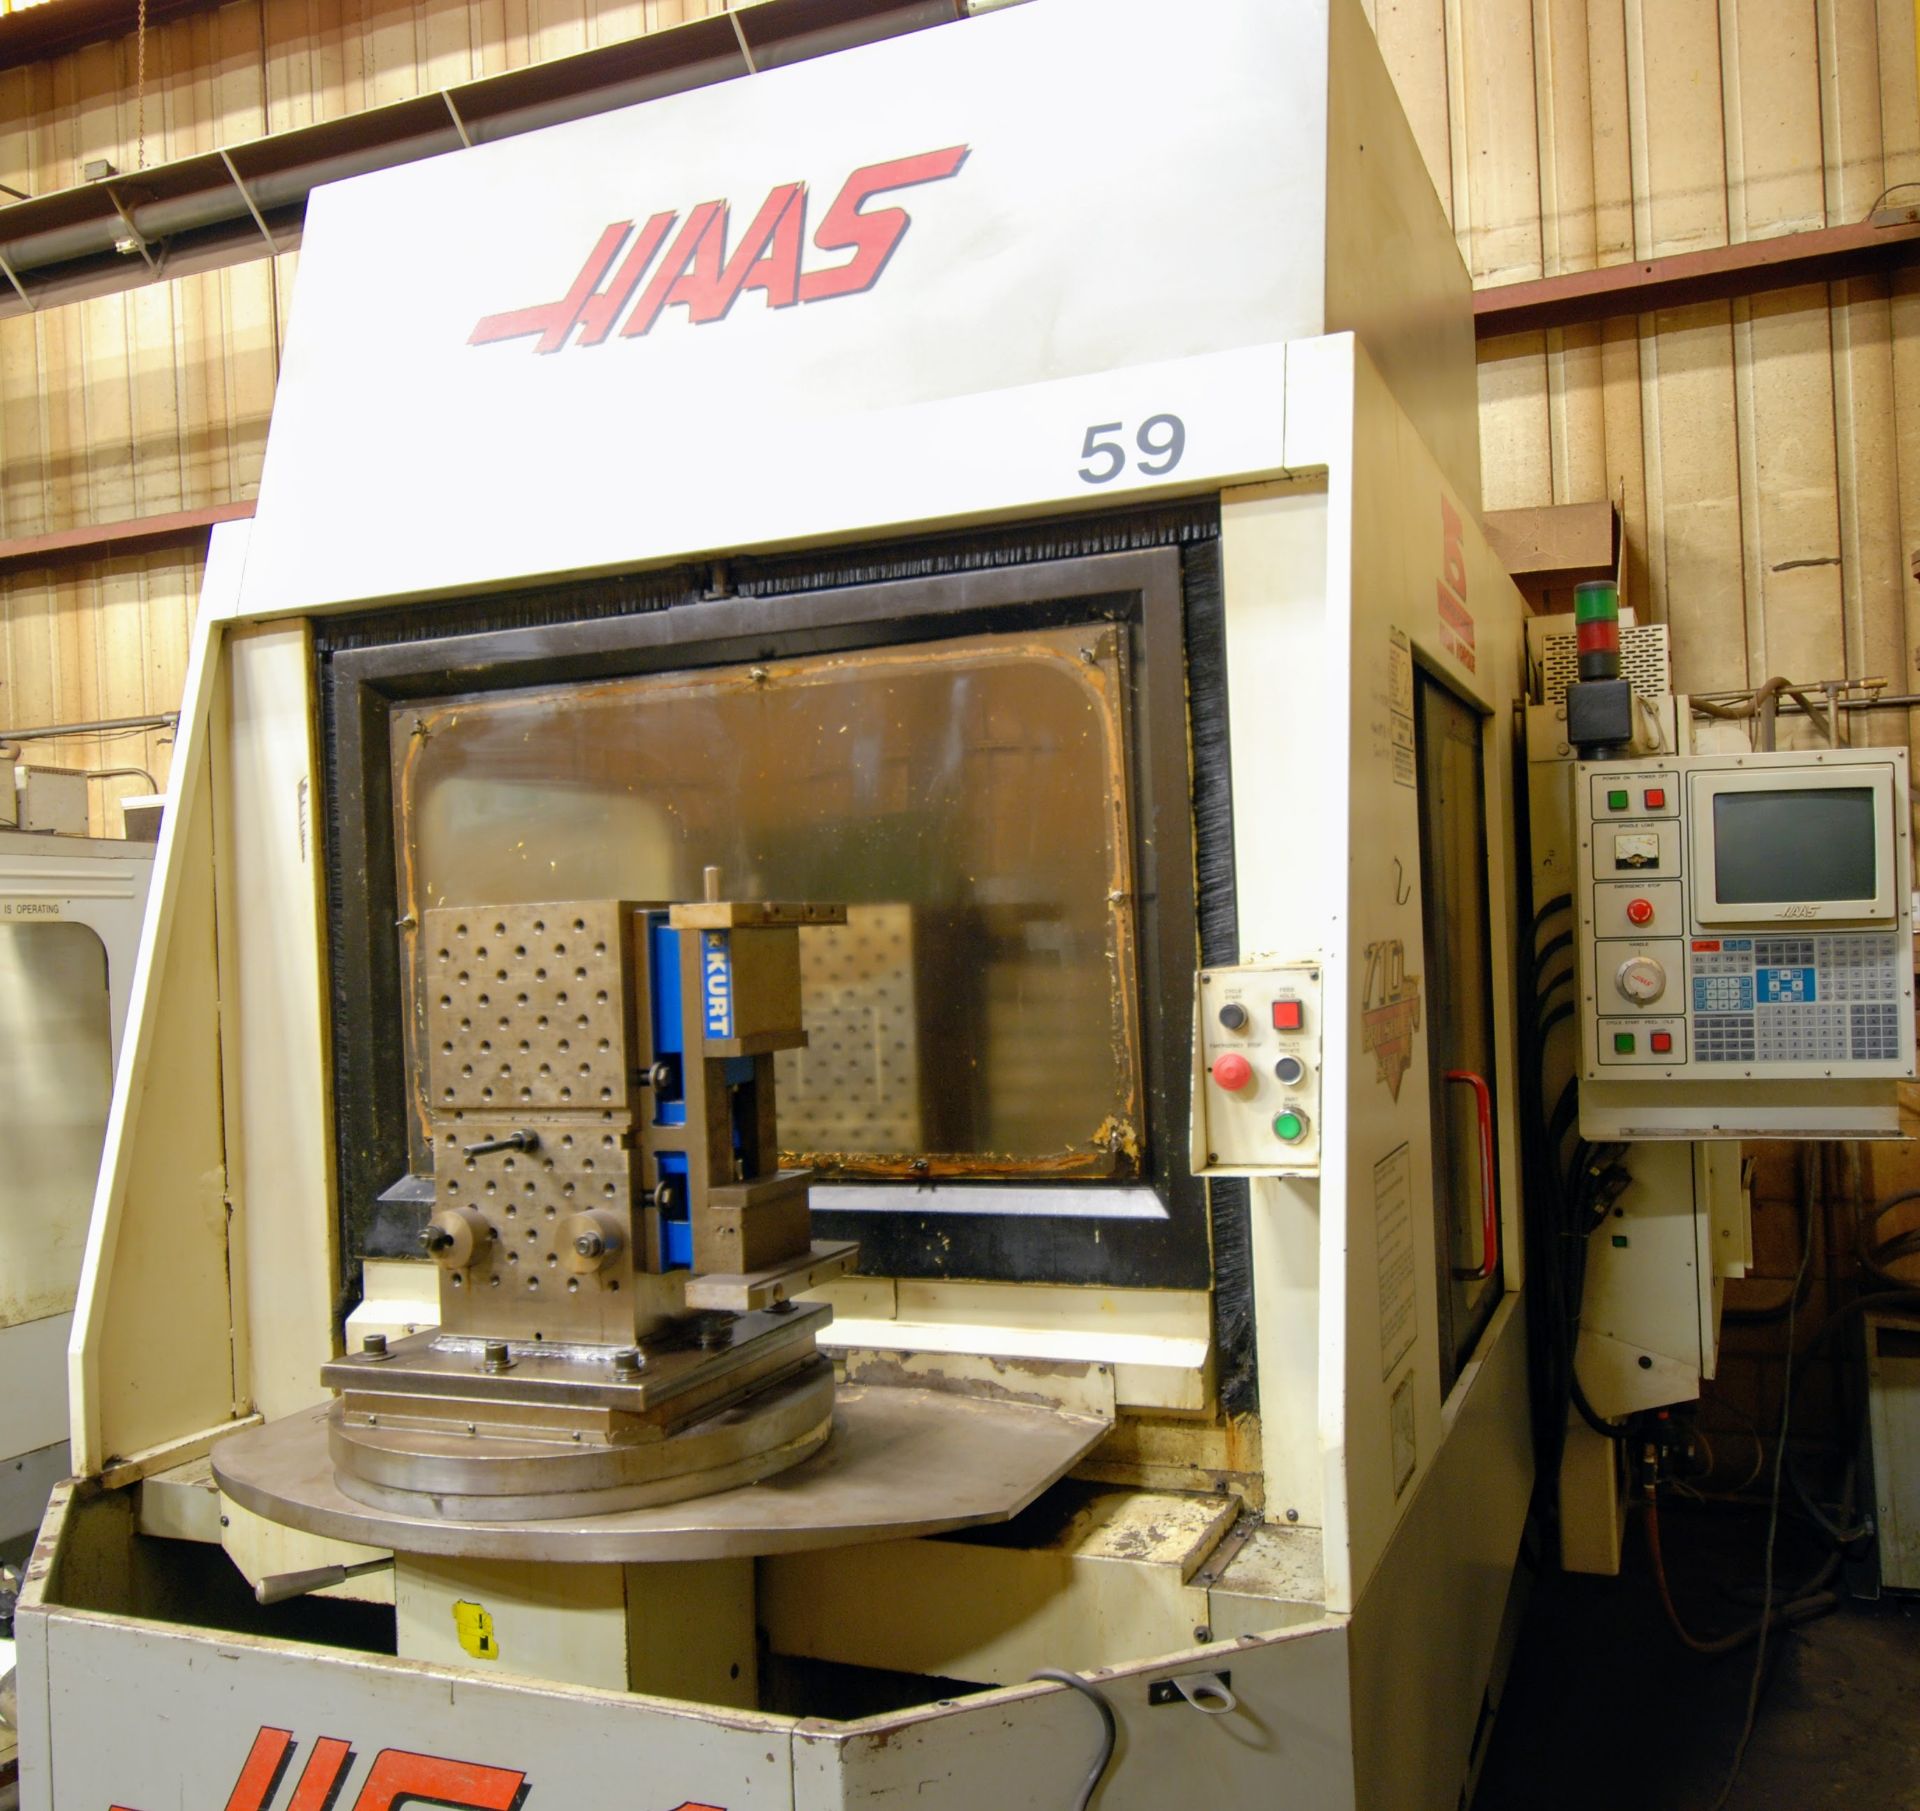 HAAS HS-1 CNC HORIZONTAL MACHINING CENTER, CNC CONTROL, 16" X 16" DUAL PALLETS, 24 ATC, 710 IPM - Image 2 of 13